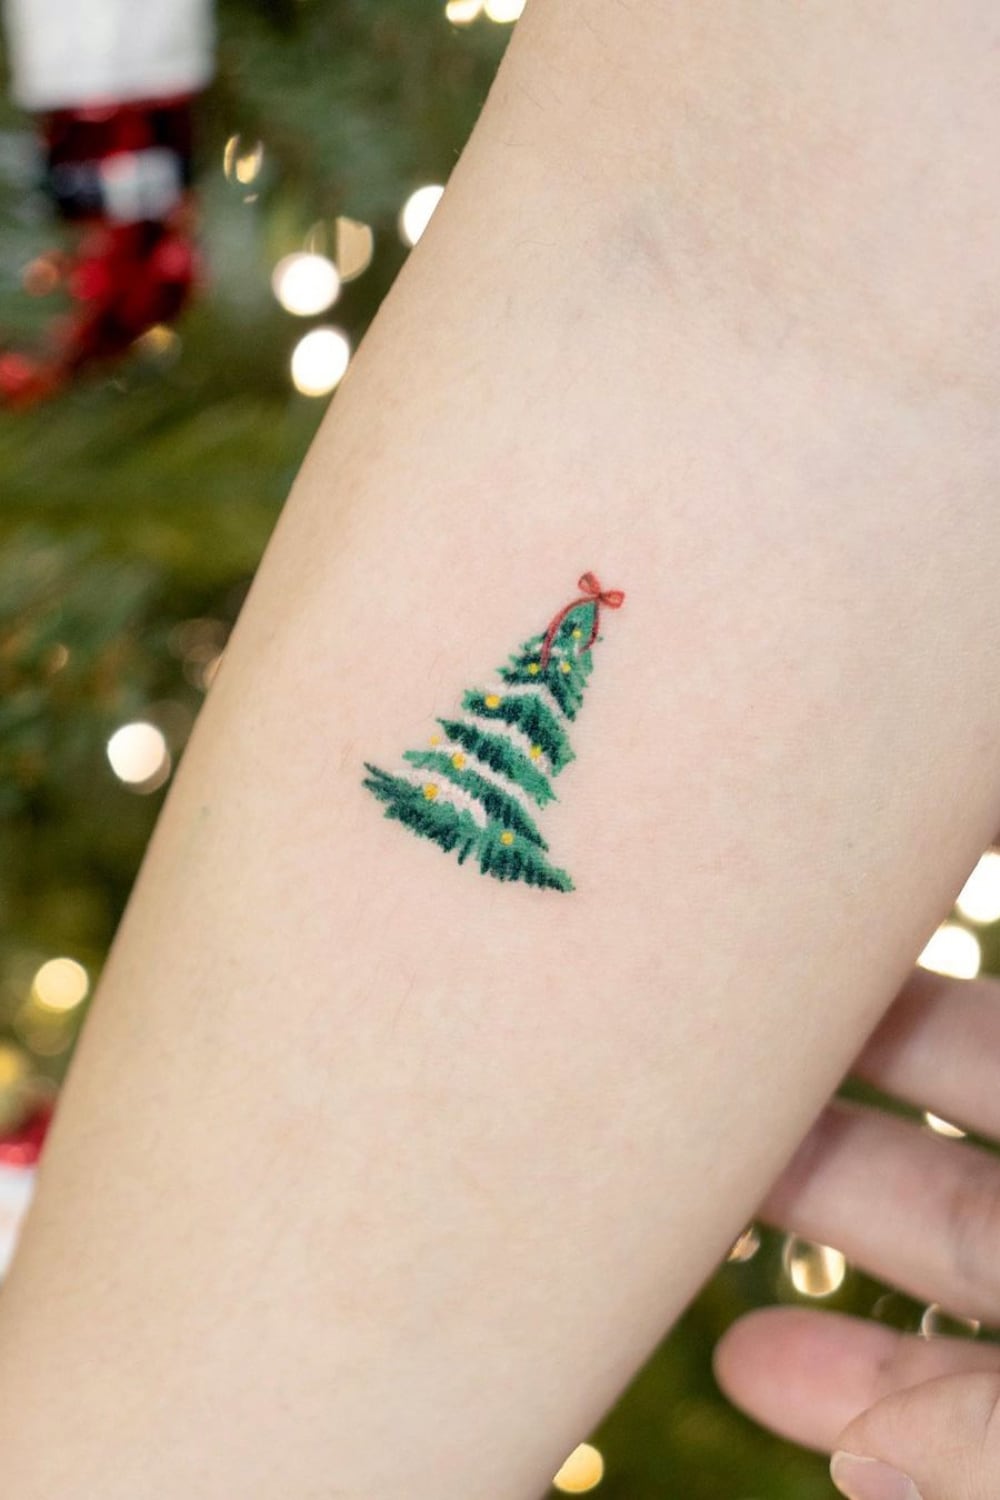 Christmas Tattoo